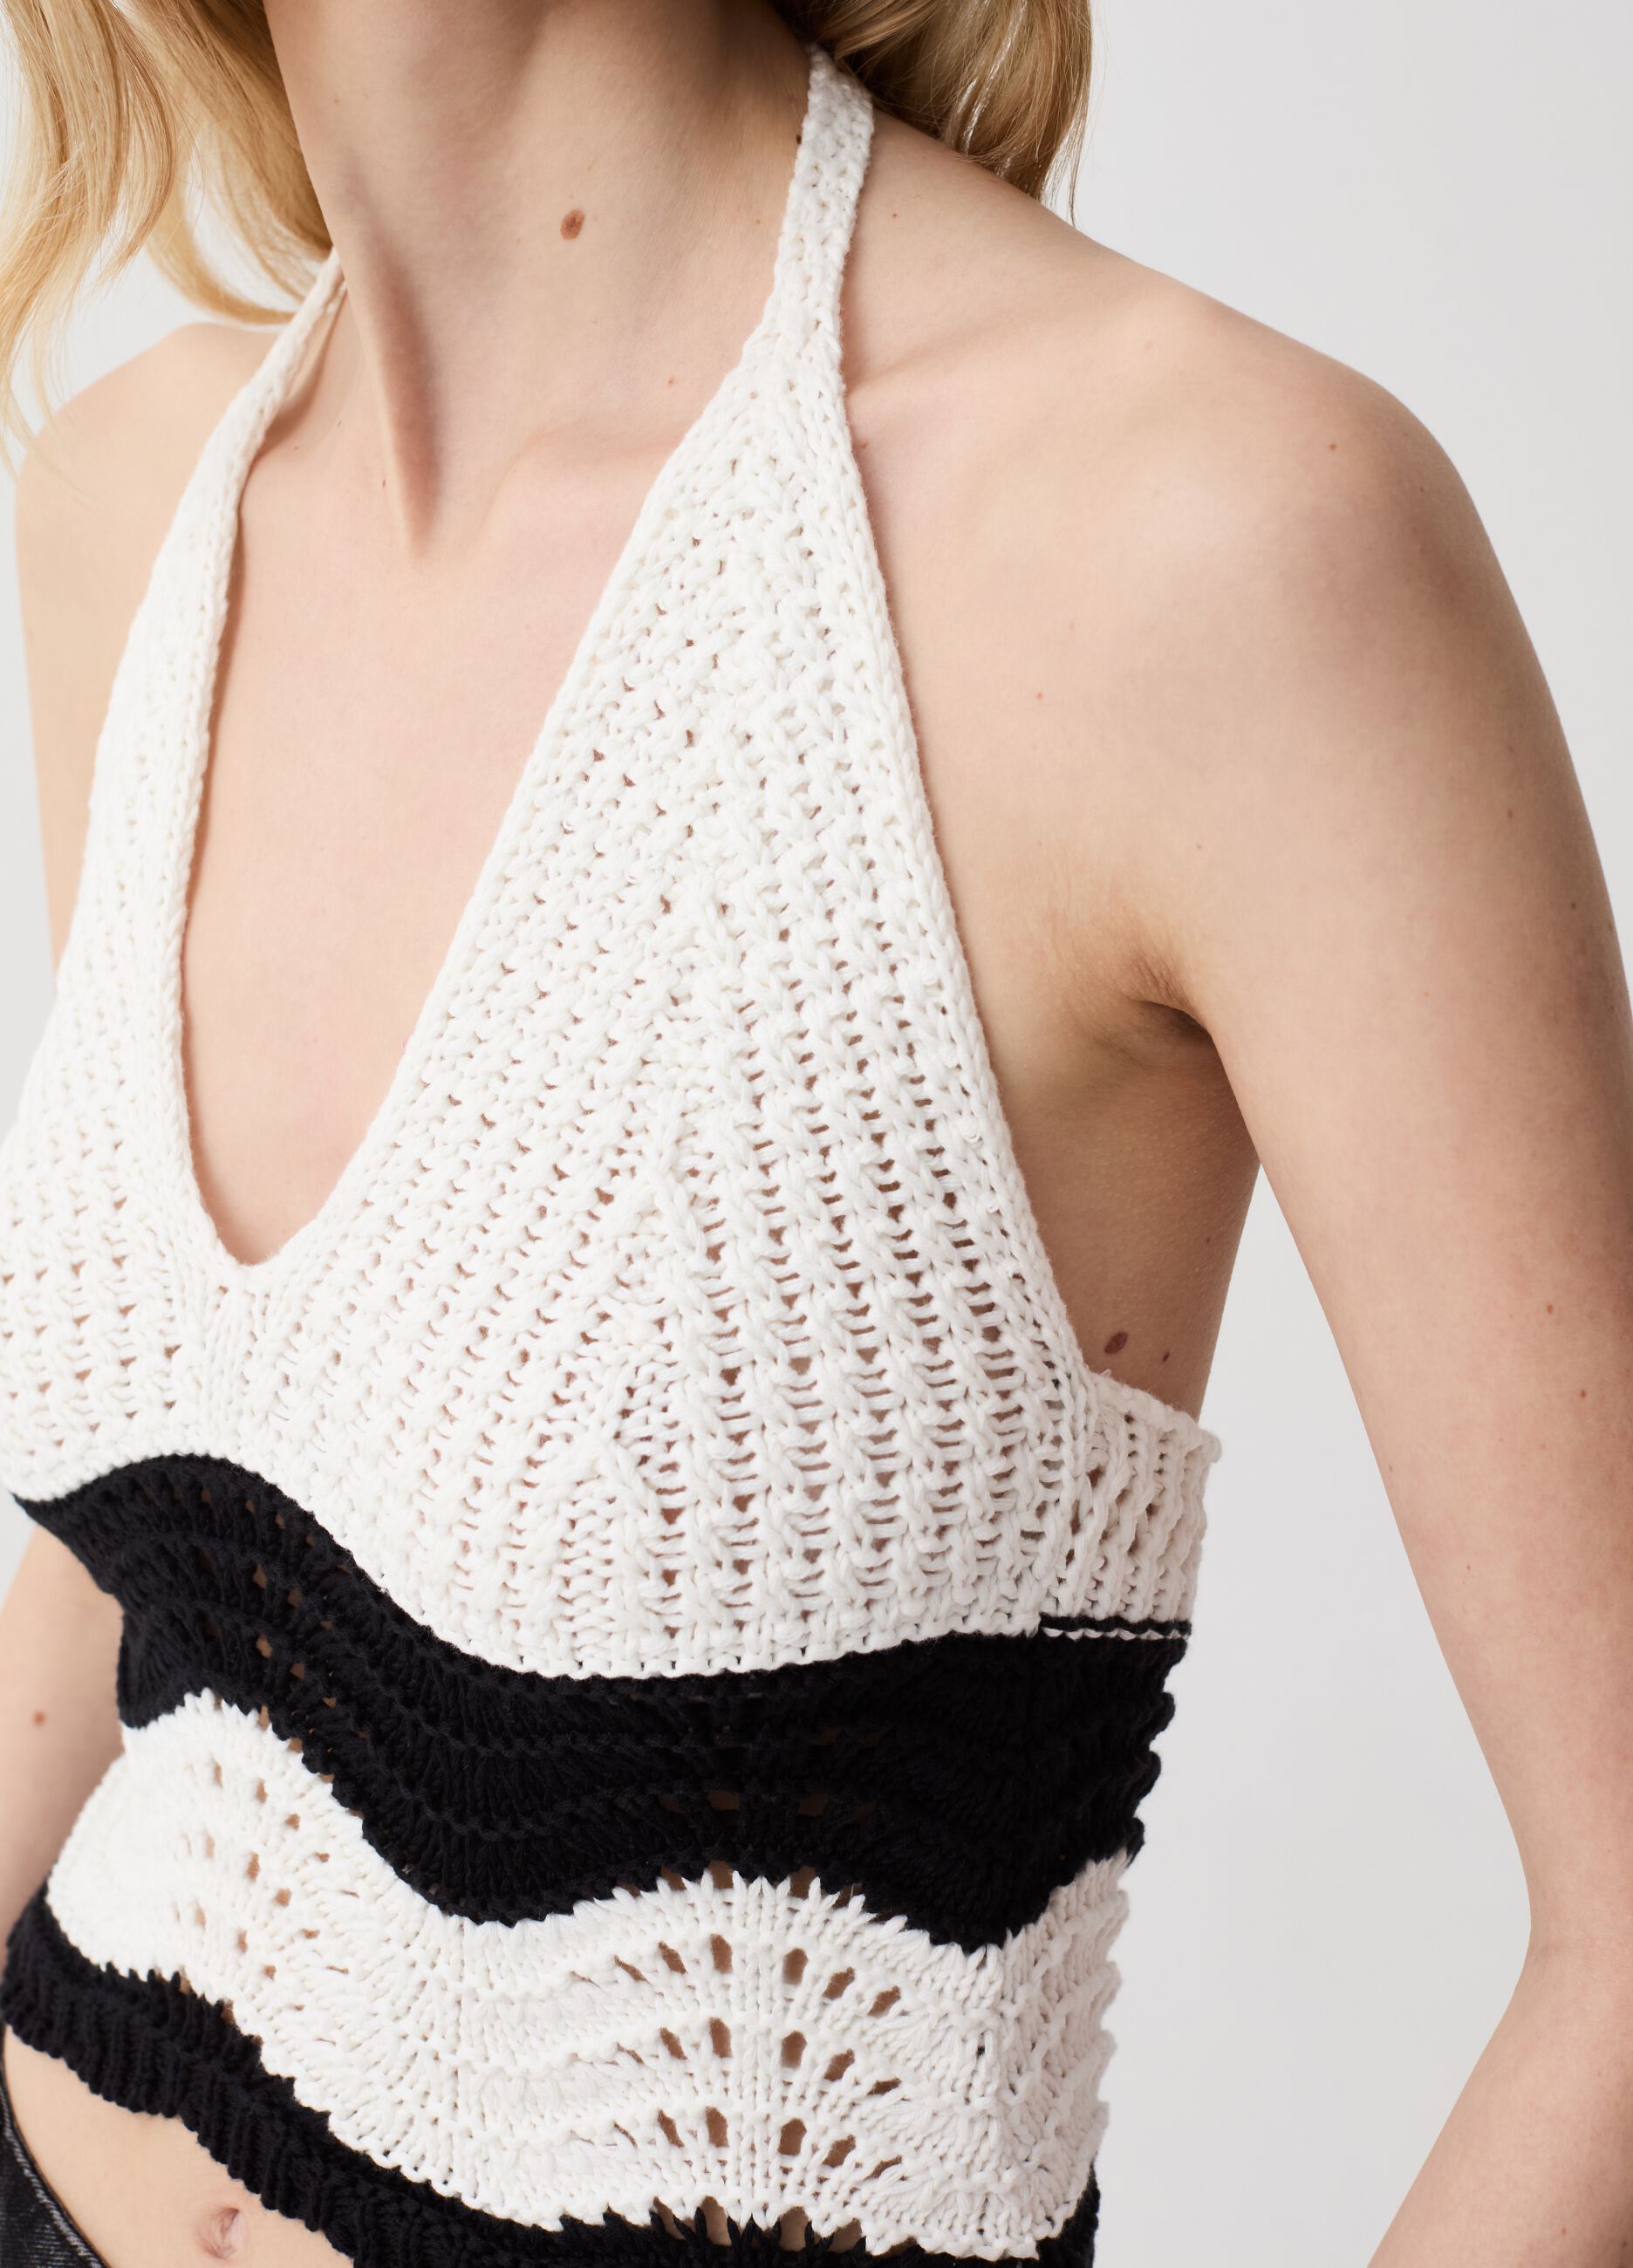 Crochet crop top with V neck